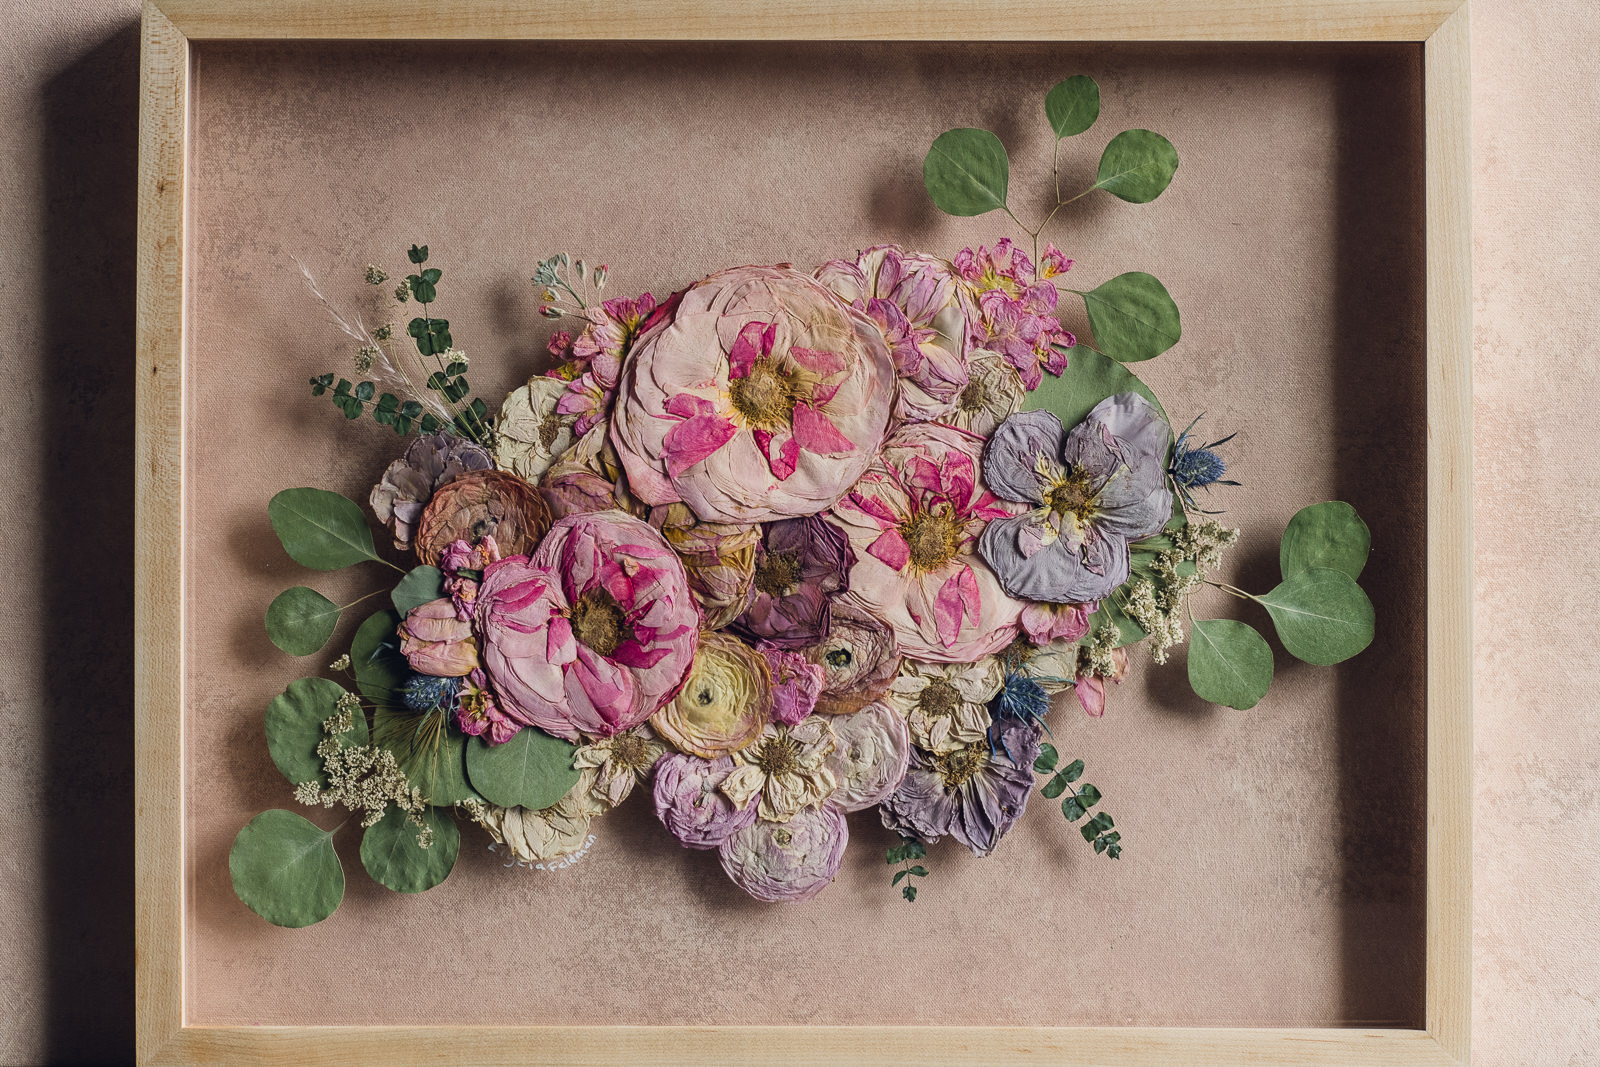 Flower Press Studio's Colorful Compositions Preserve Botanicals